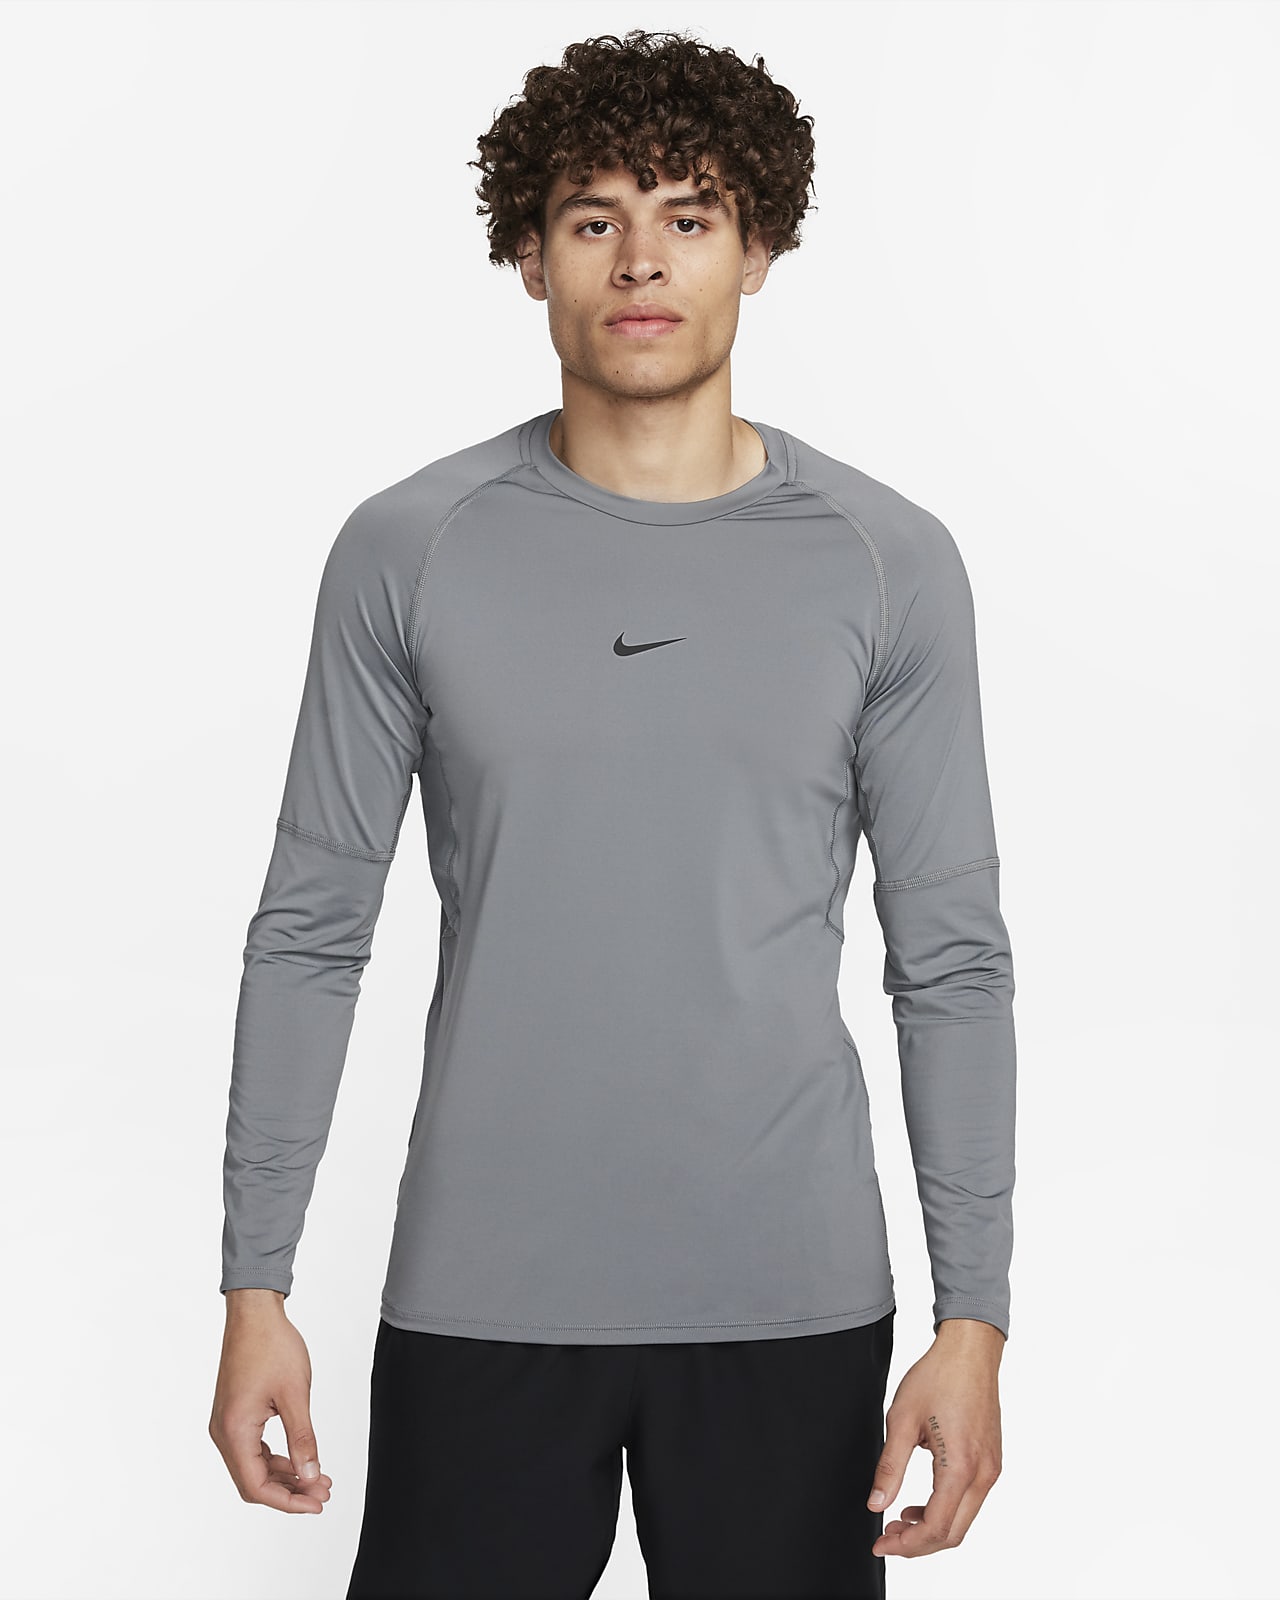 Nike Pro Men's Long-Sleeve Fitness Top.